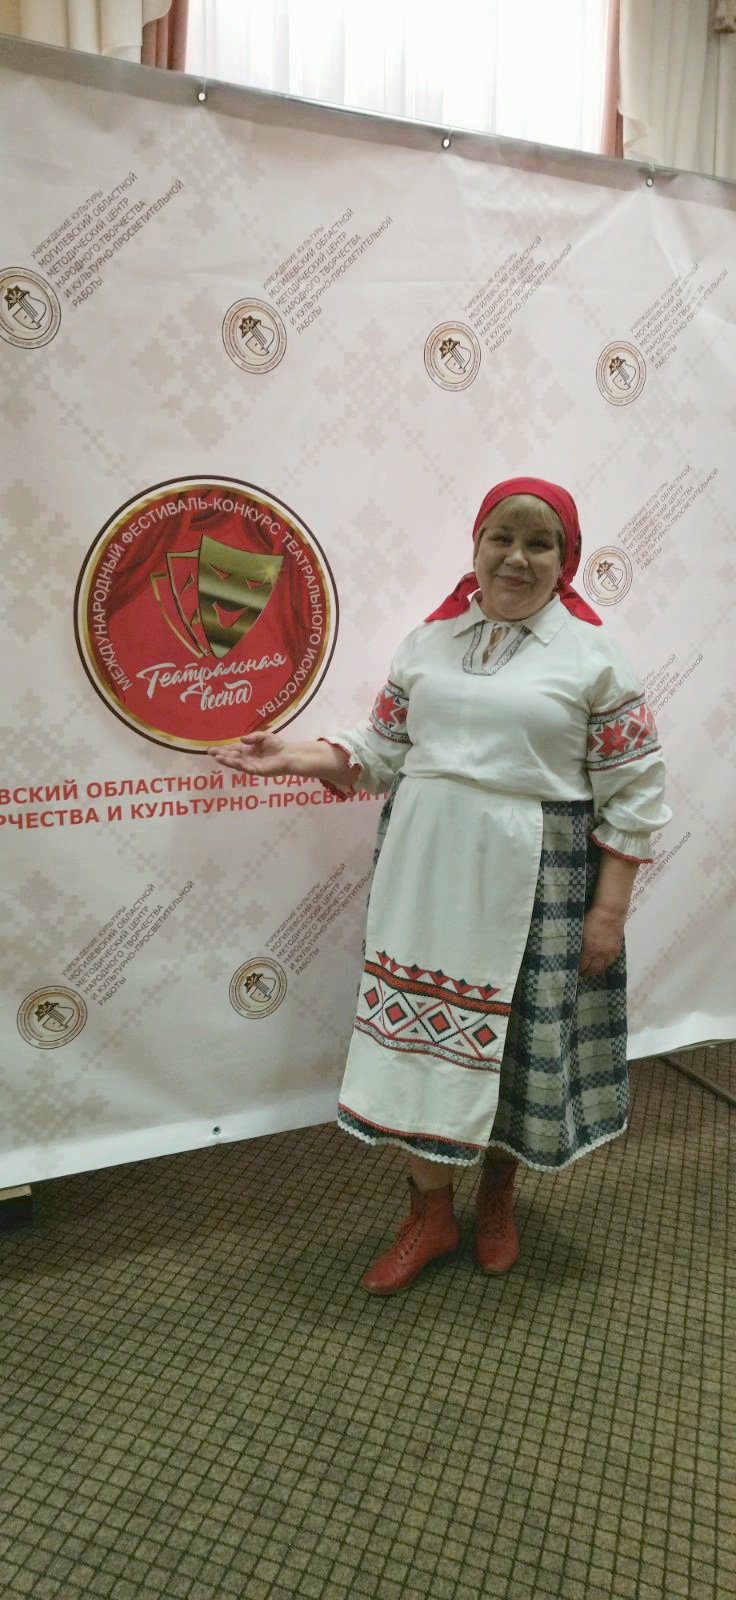 Таллина Балматкова стала лауреатом фестиваля-конкурса «Театральная весна»